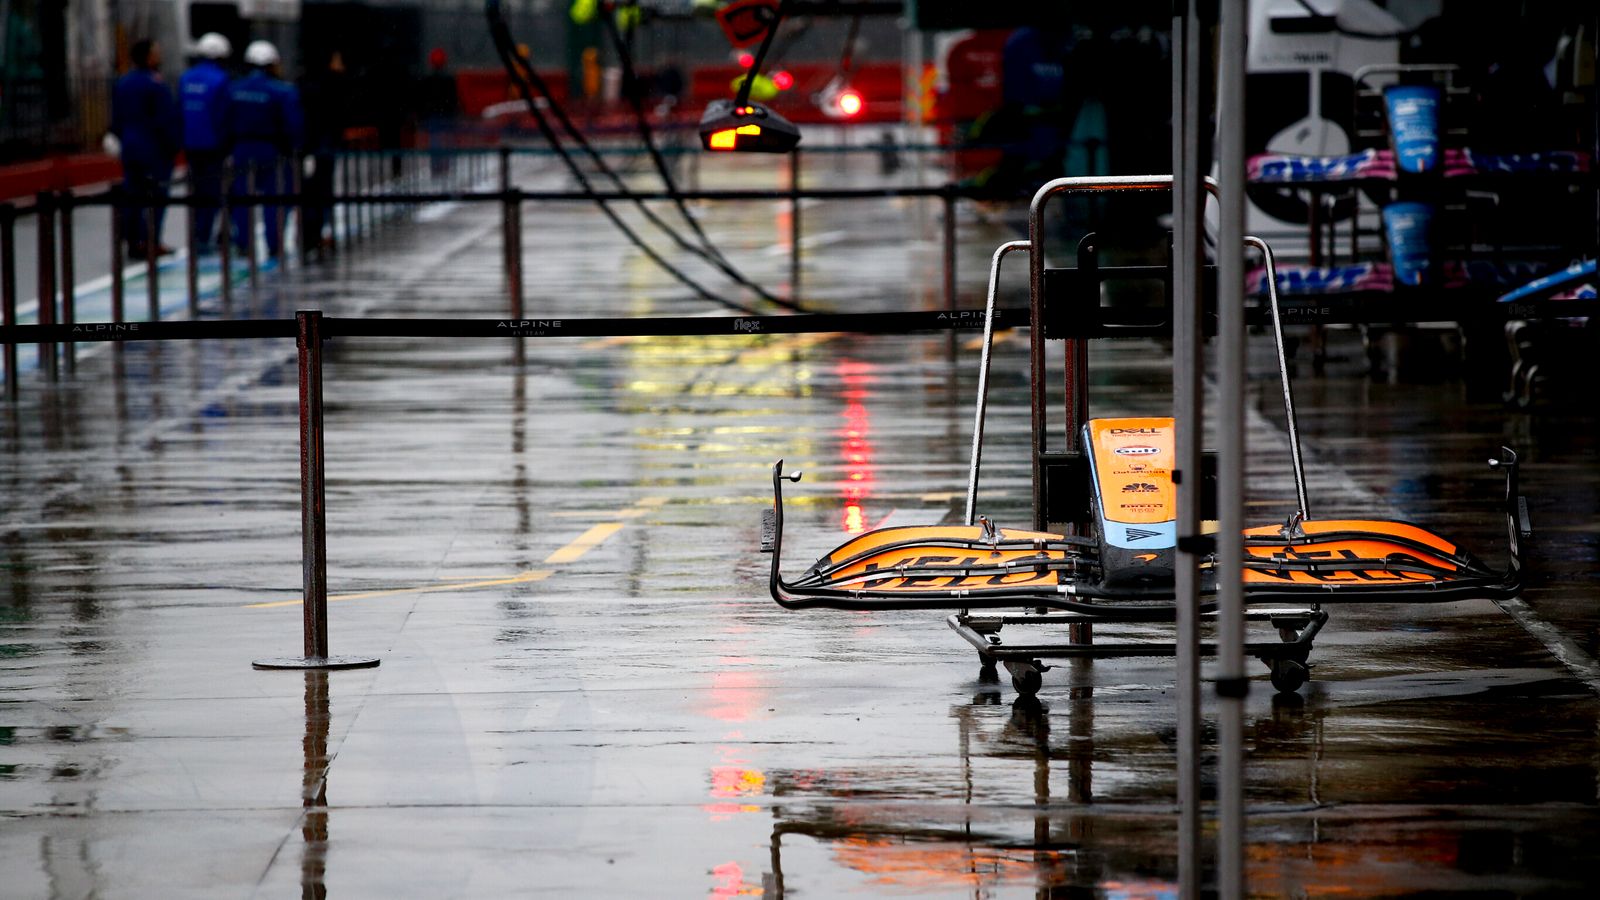 Emilia Romagna GP F1 personnel asked to leave Imola paddock amid concern over heavy rain F1 News